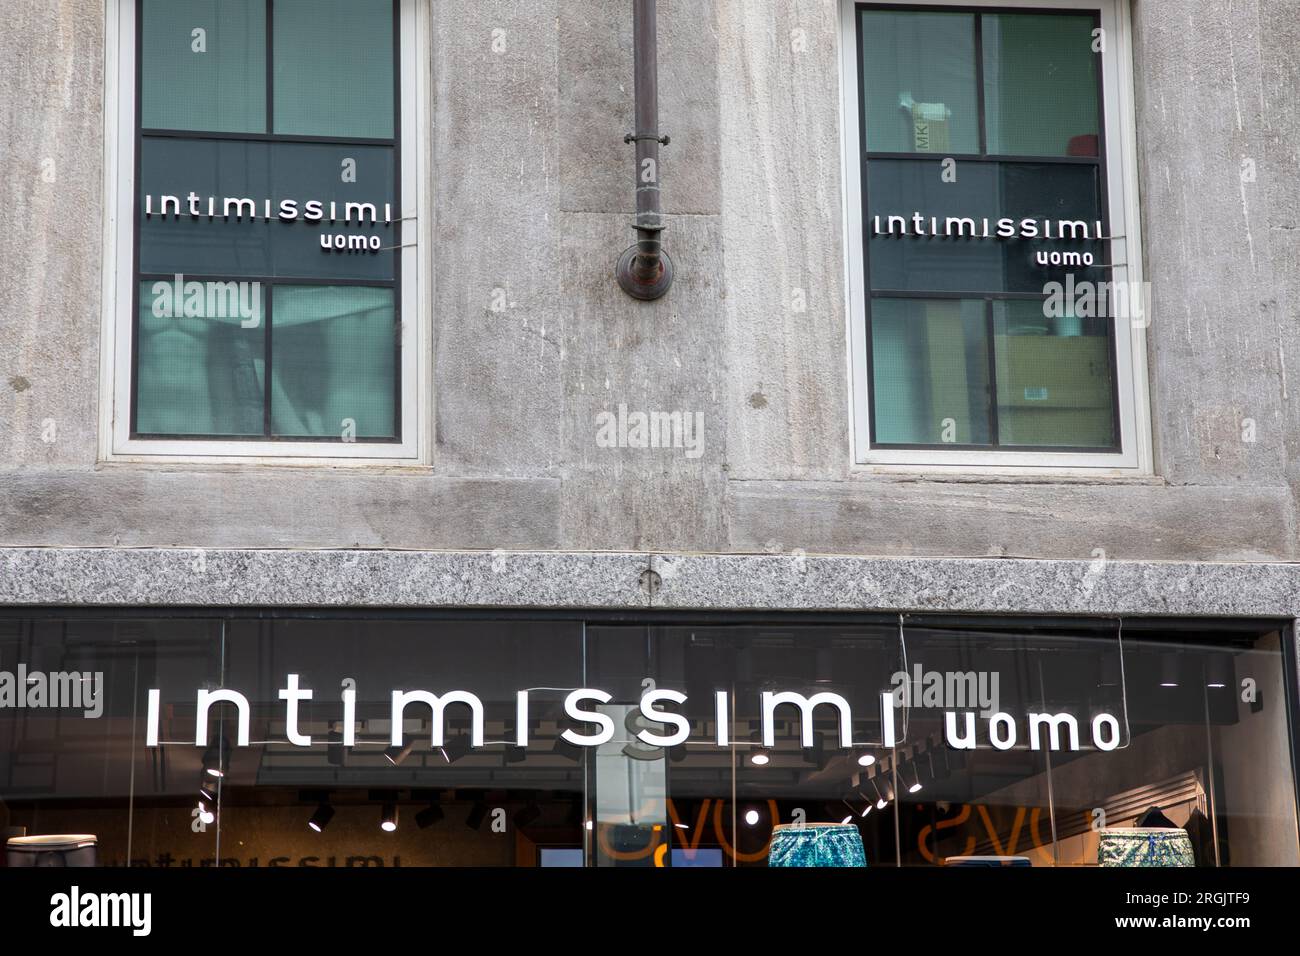 Milan , Italy - 08 07 2023 : intimissimi uomo logo brand and text